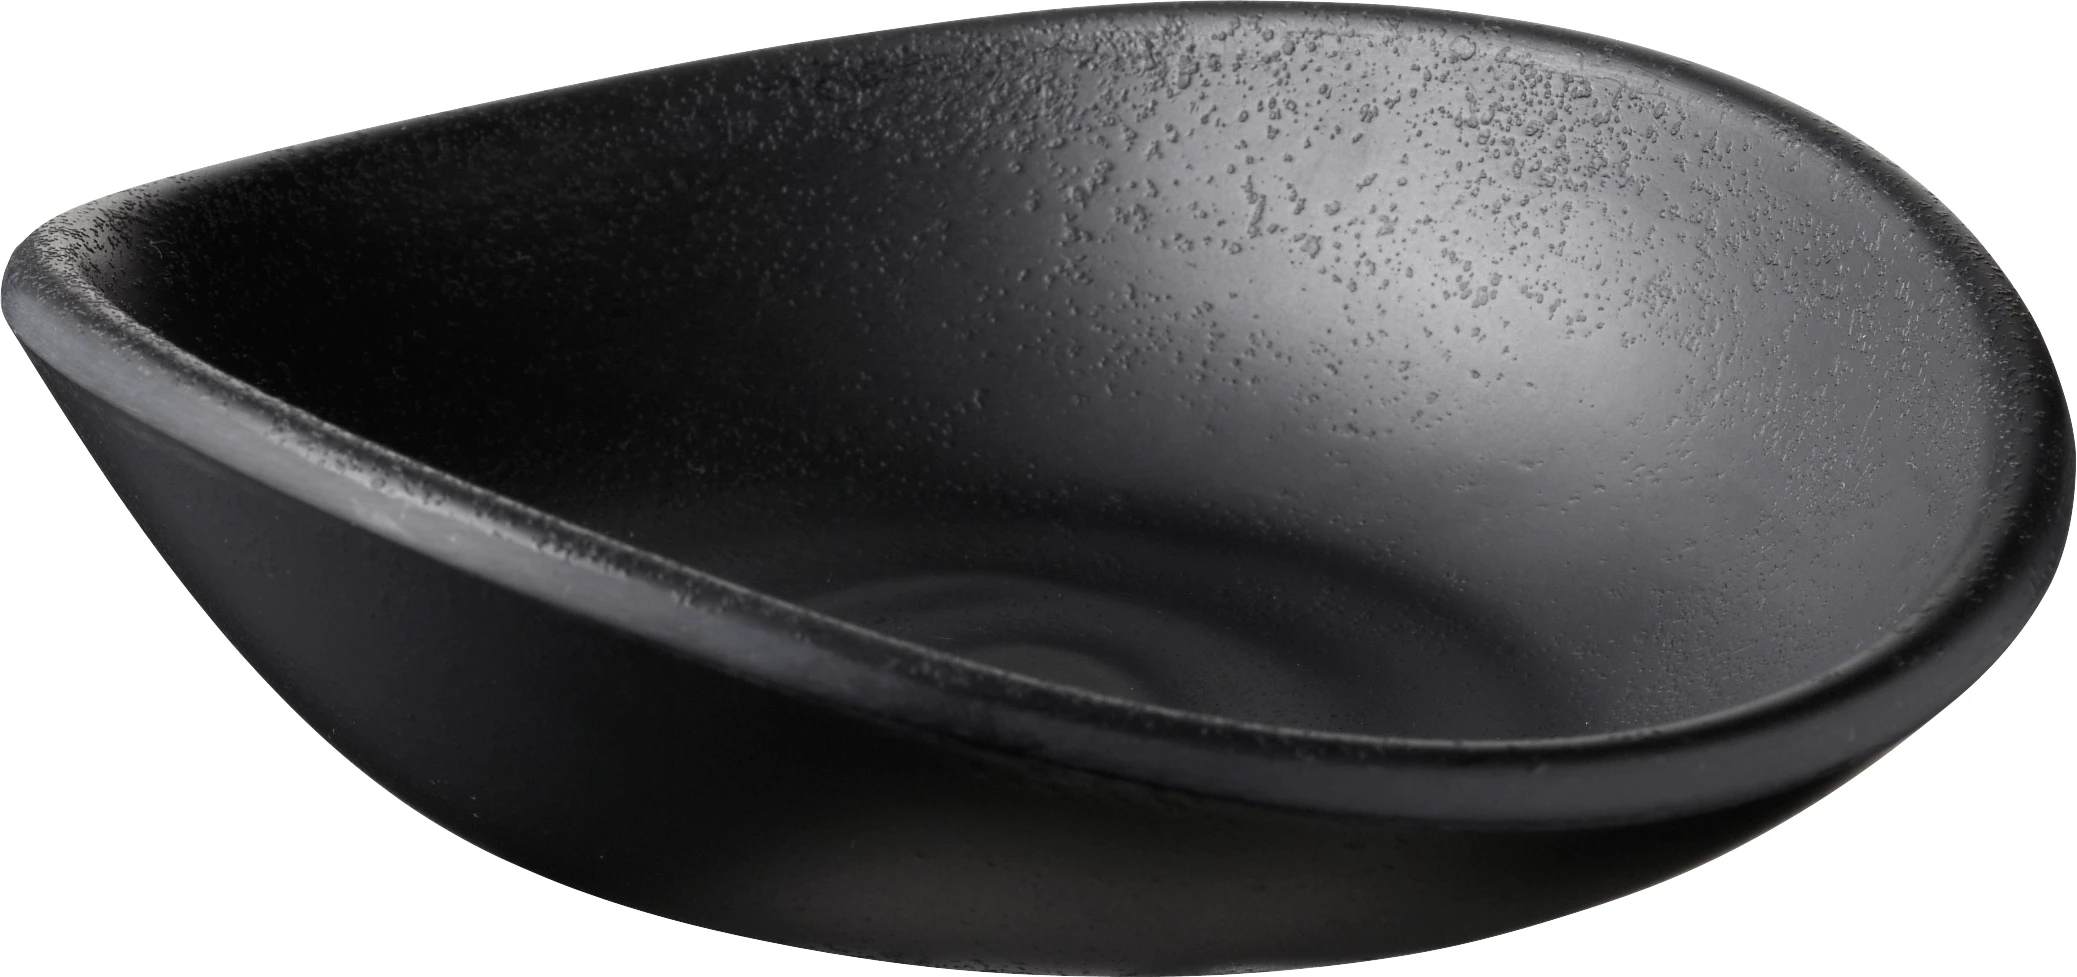 APS Zen skål, oval, sort, 13 x 11 cm